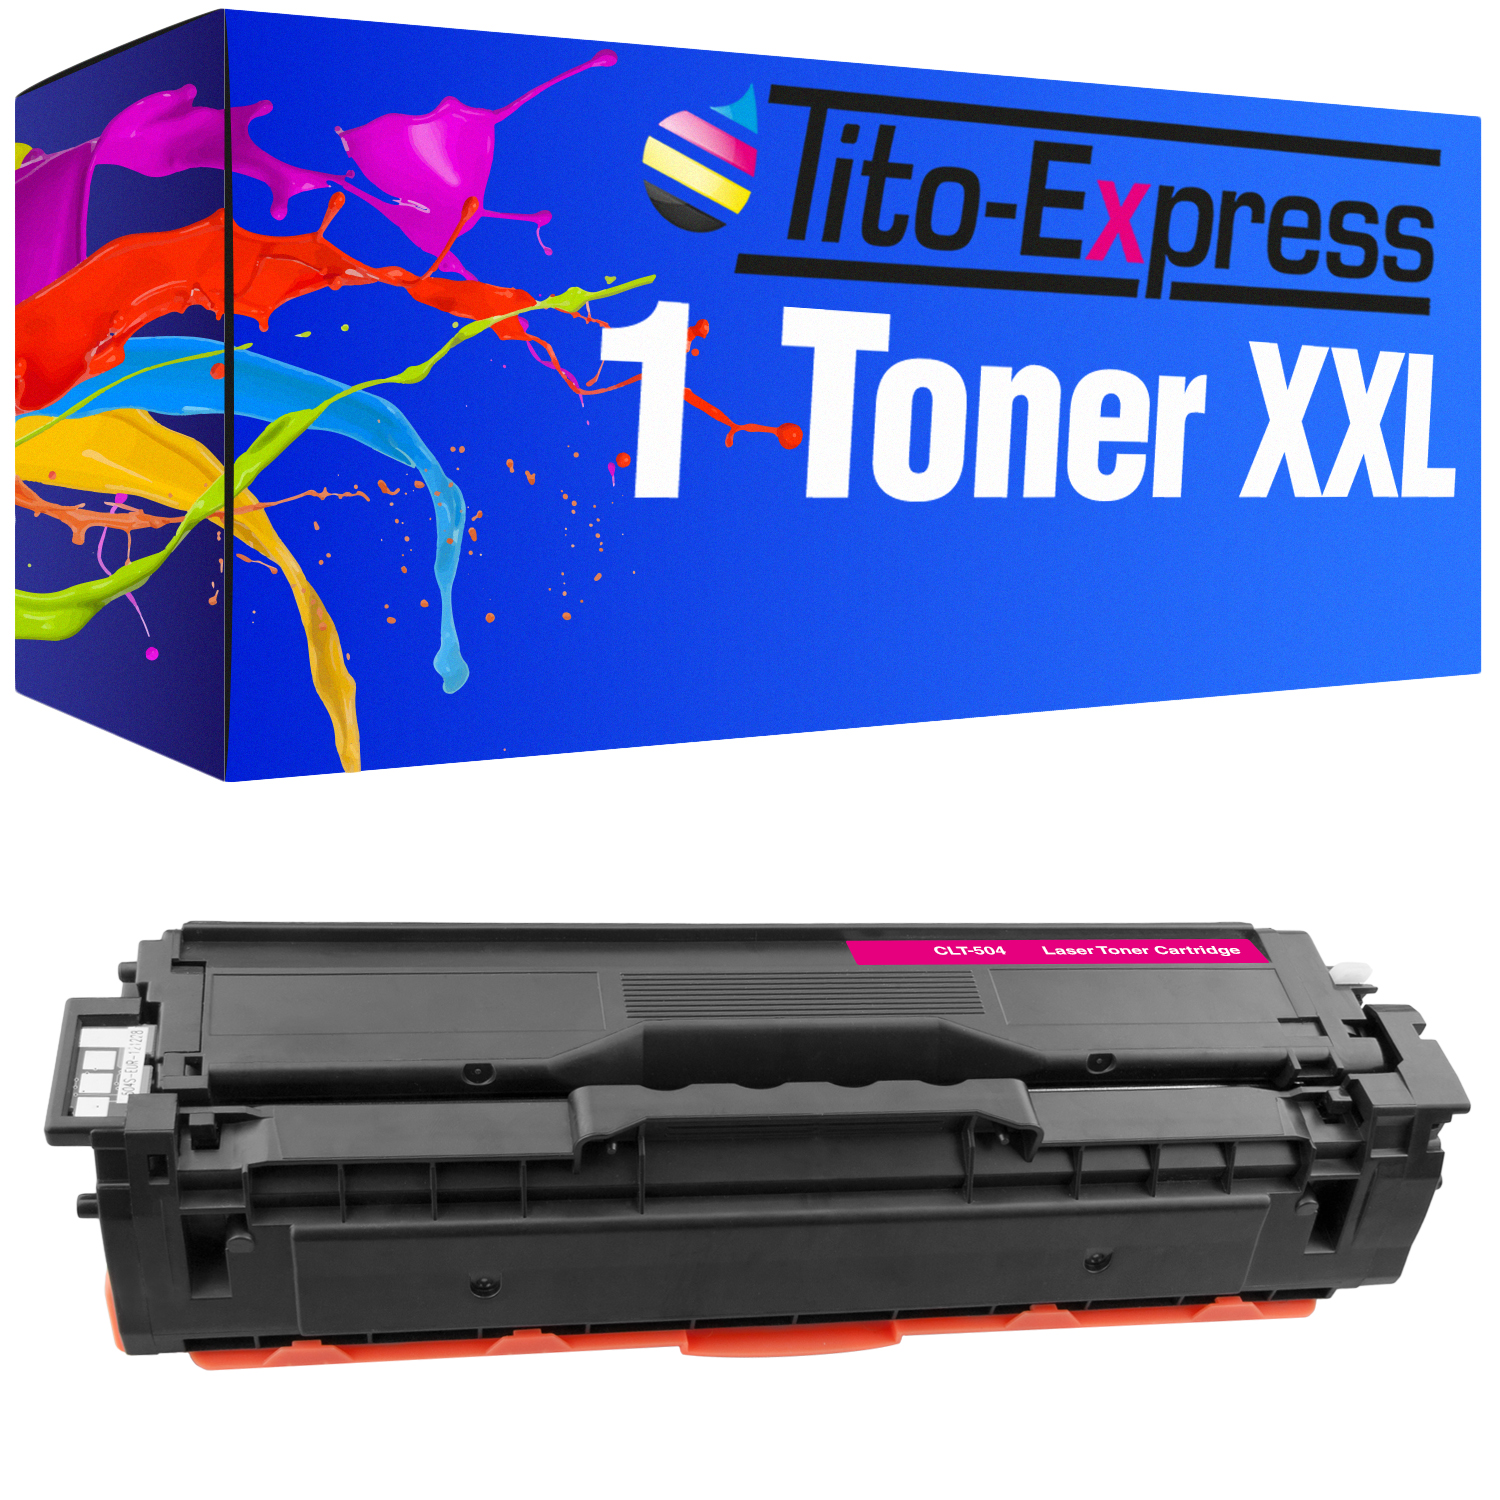 (SU292A) Toner Toner CLP-415 PLATINUMSERIE 1 ersetzt CLT-504S TITO-EXPRESS magenta Samsung